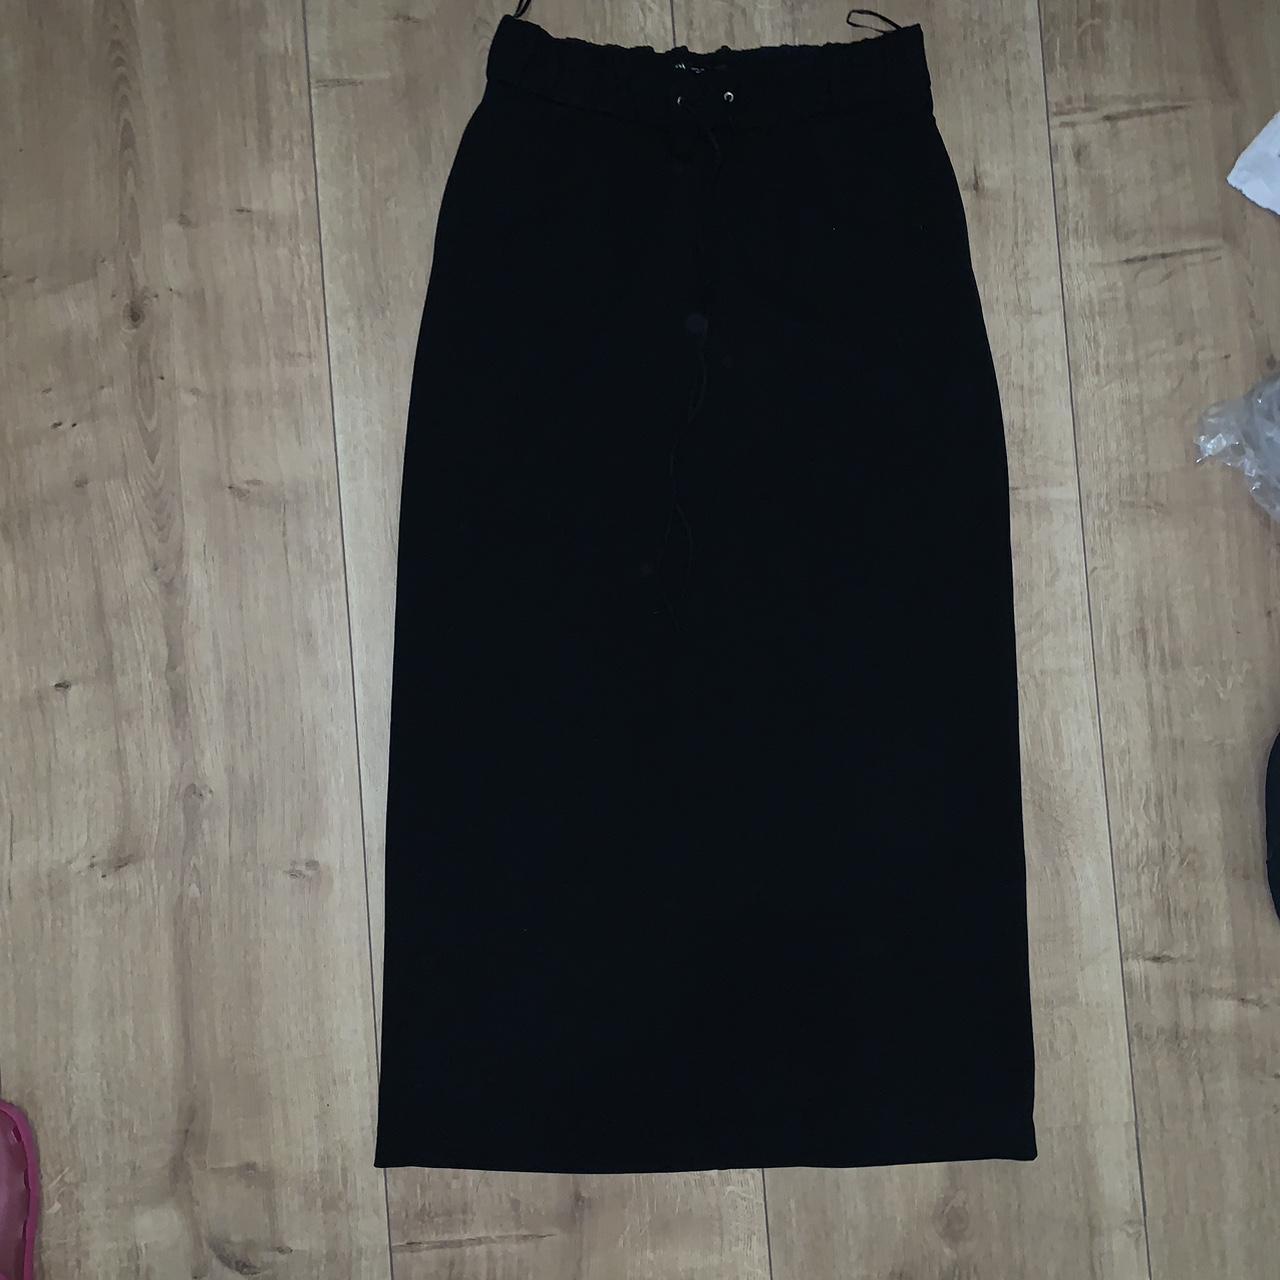 Zara Women's Black Skirt | Depop